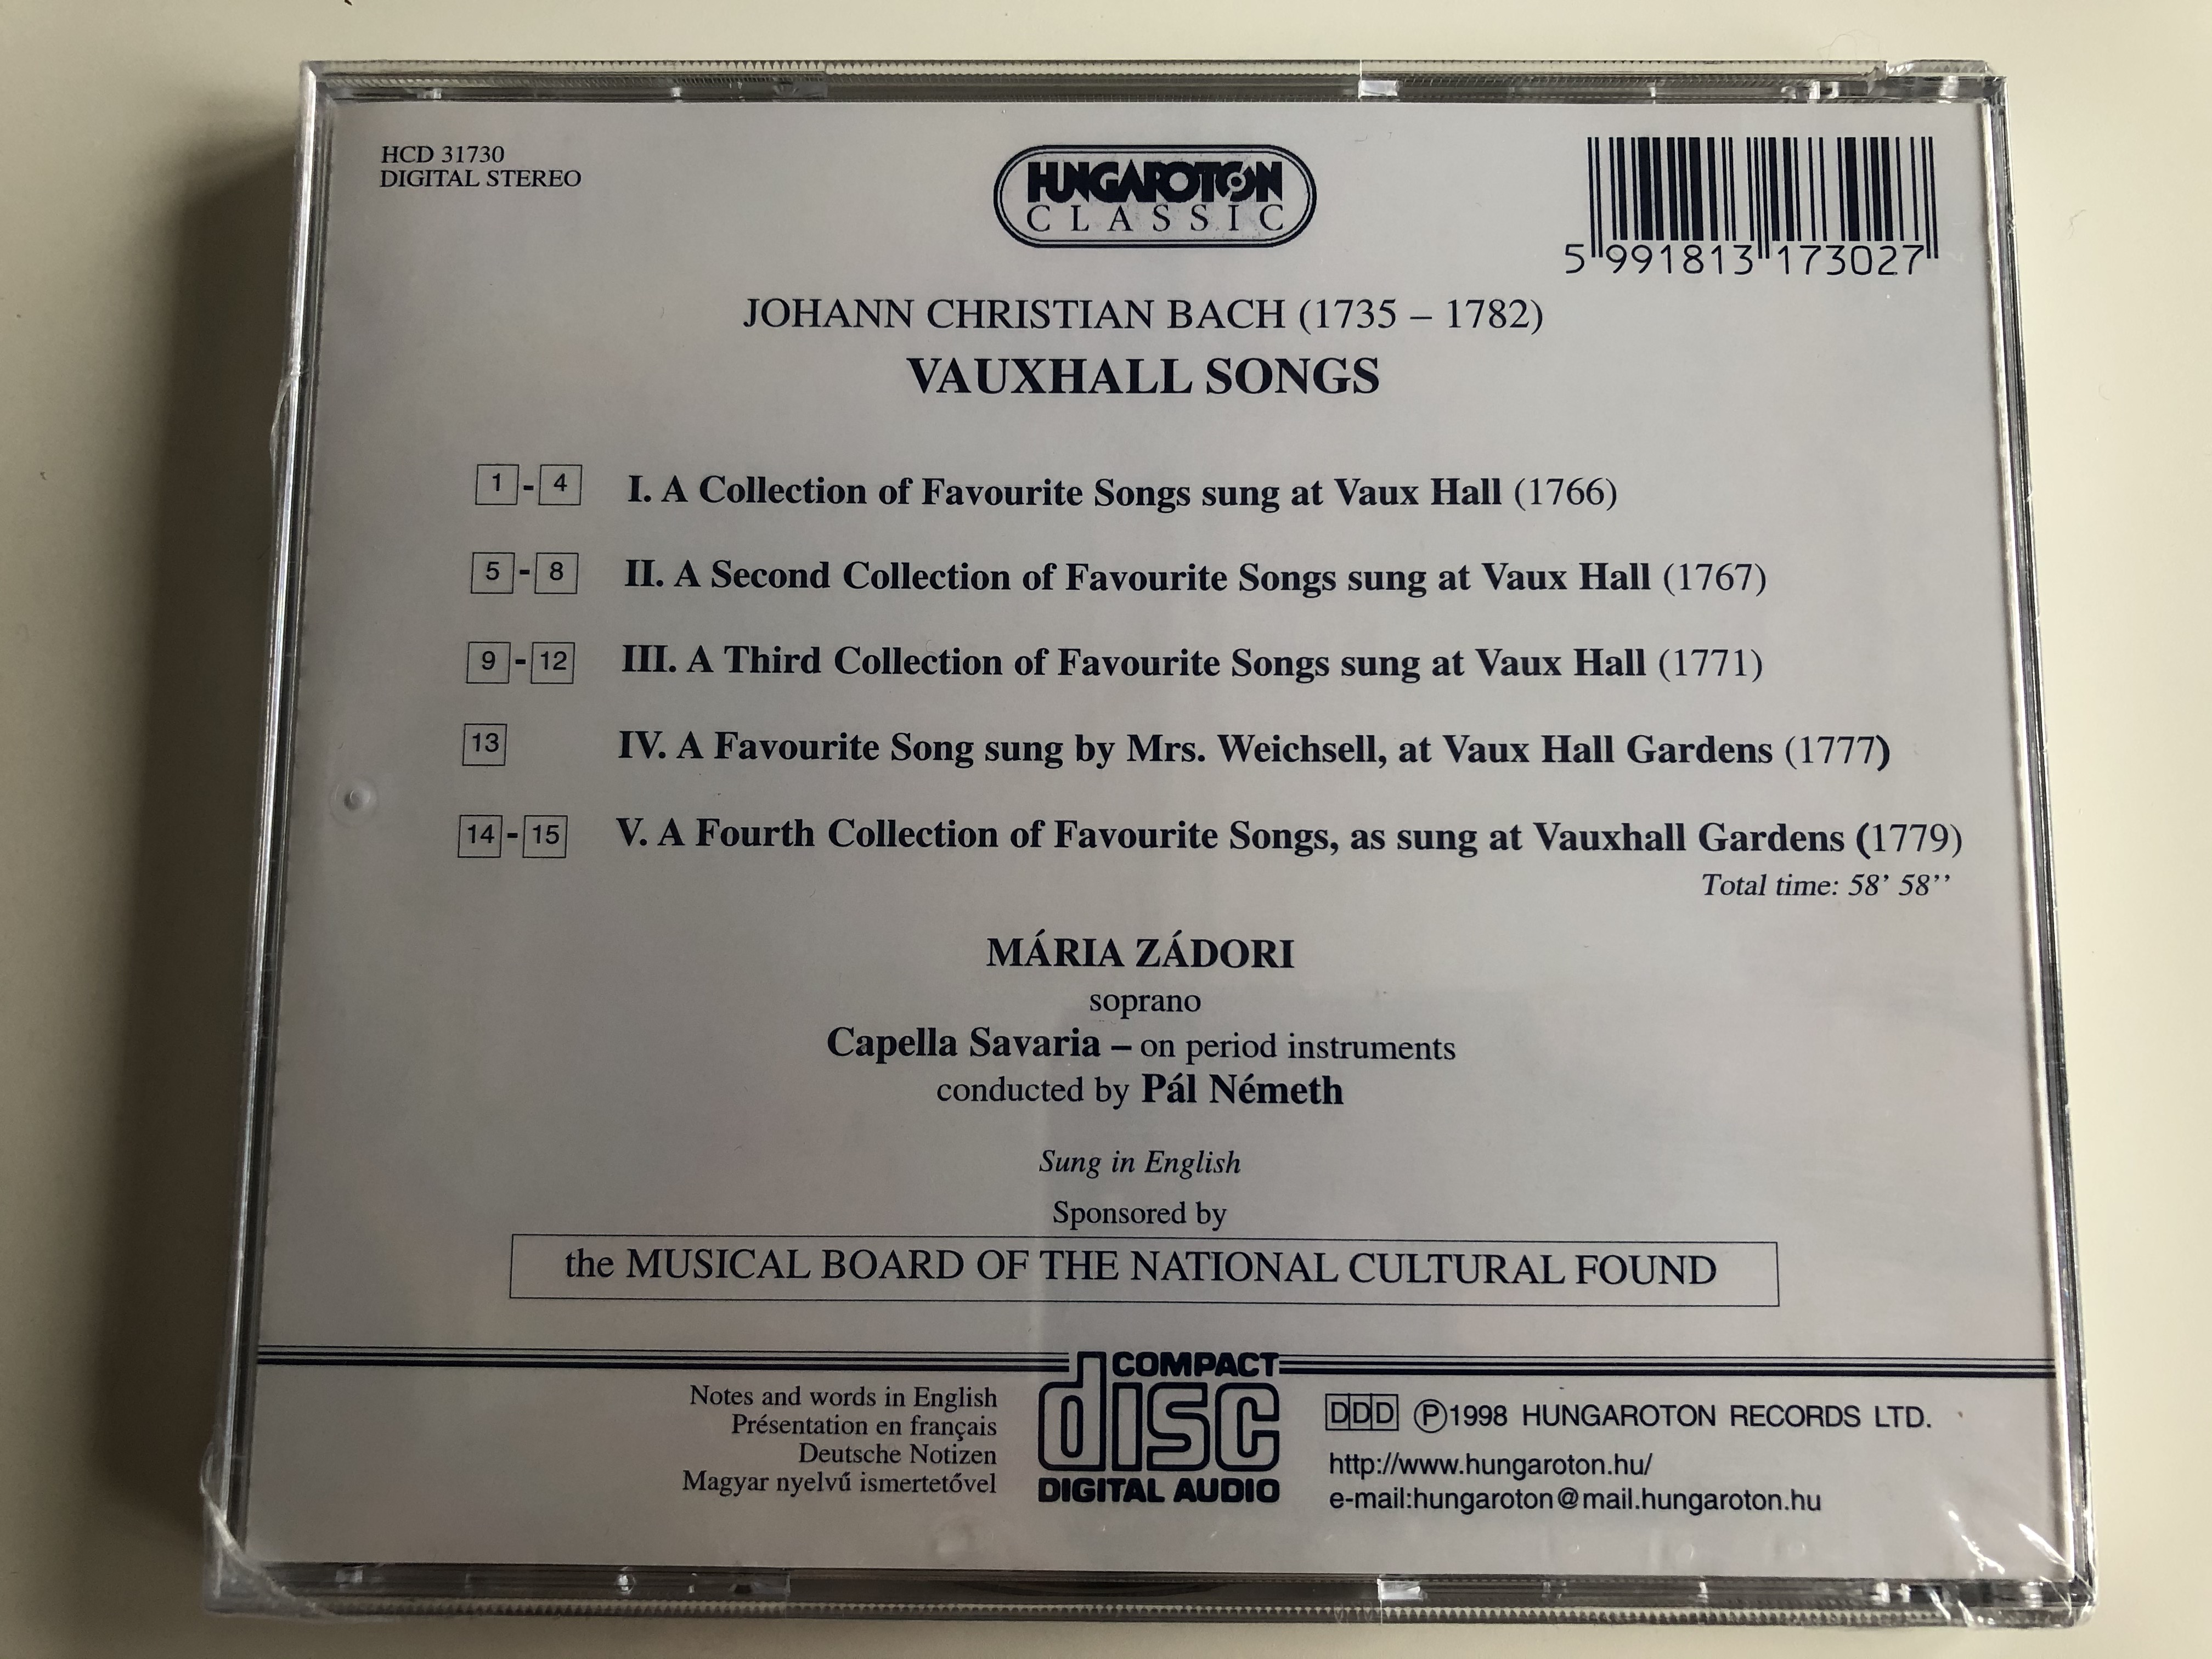 j.-chr.-bach-vauxhall-songs-complete-maria-zadori-soprano-capella-savaria-on-period-instruments-conducted-pal-nemeth-hungaroton-classic-audio-cd-1998-stereo-hcd-31730-2-.jpg